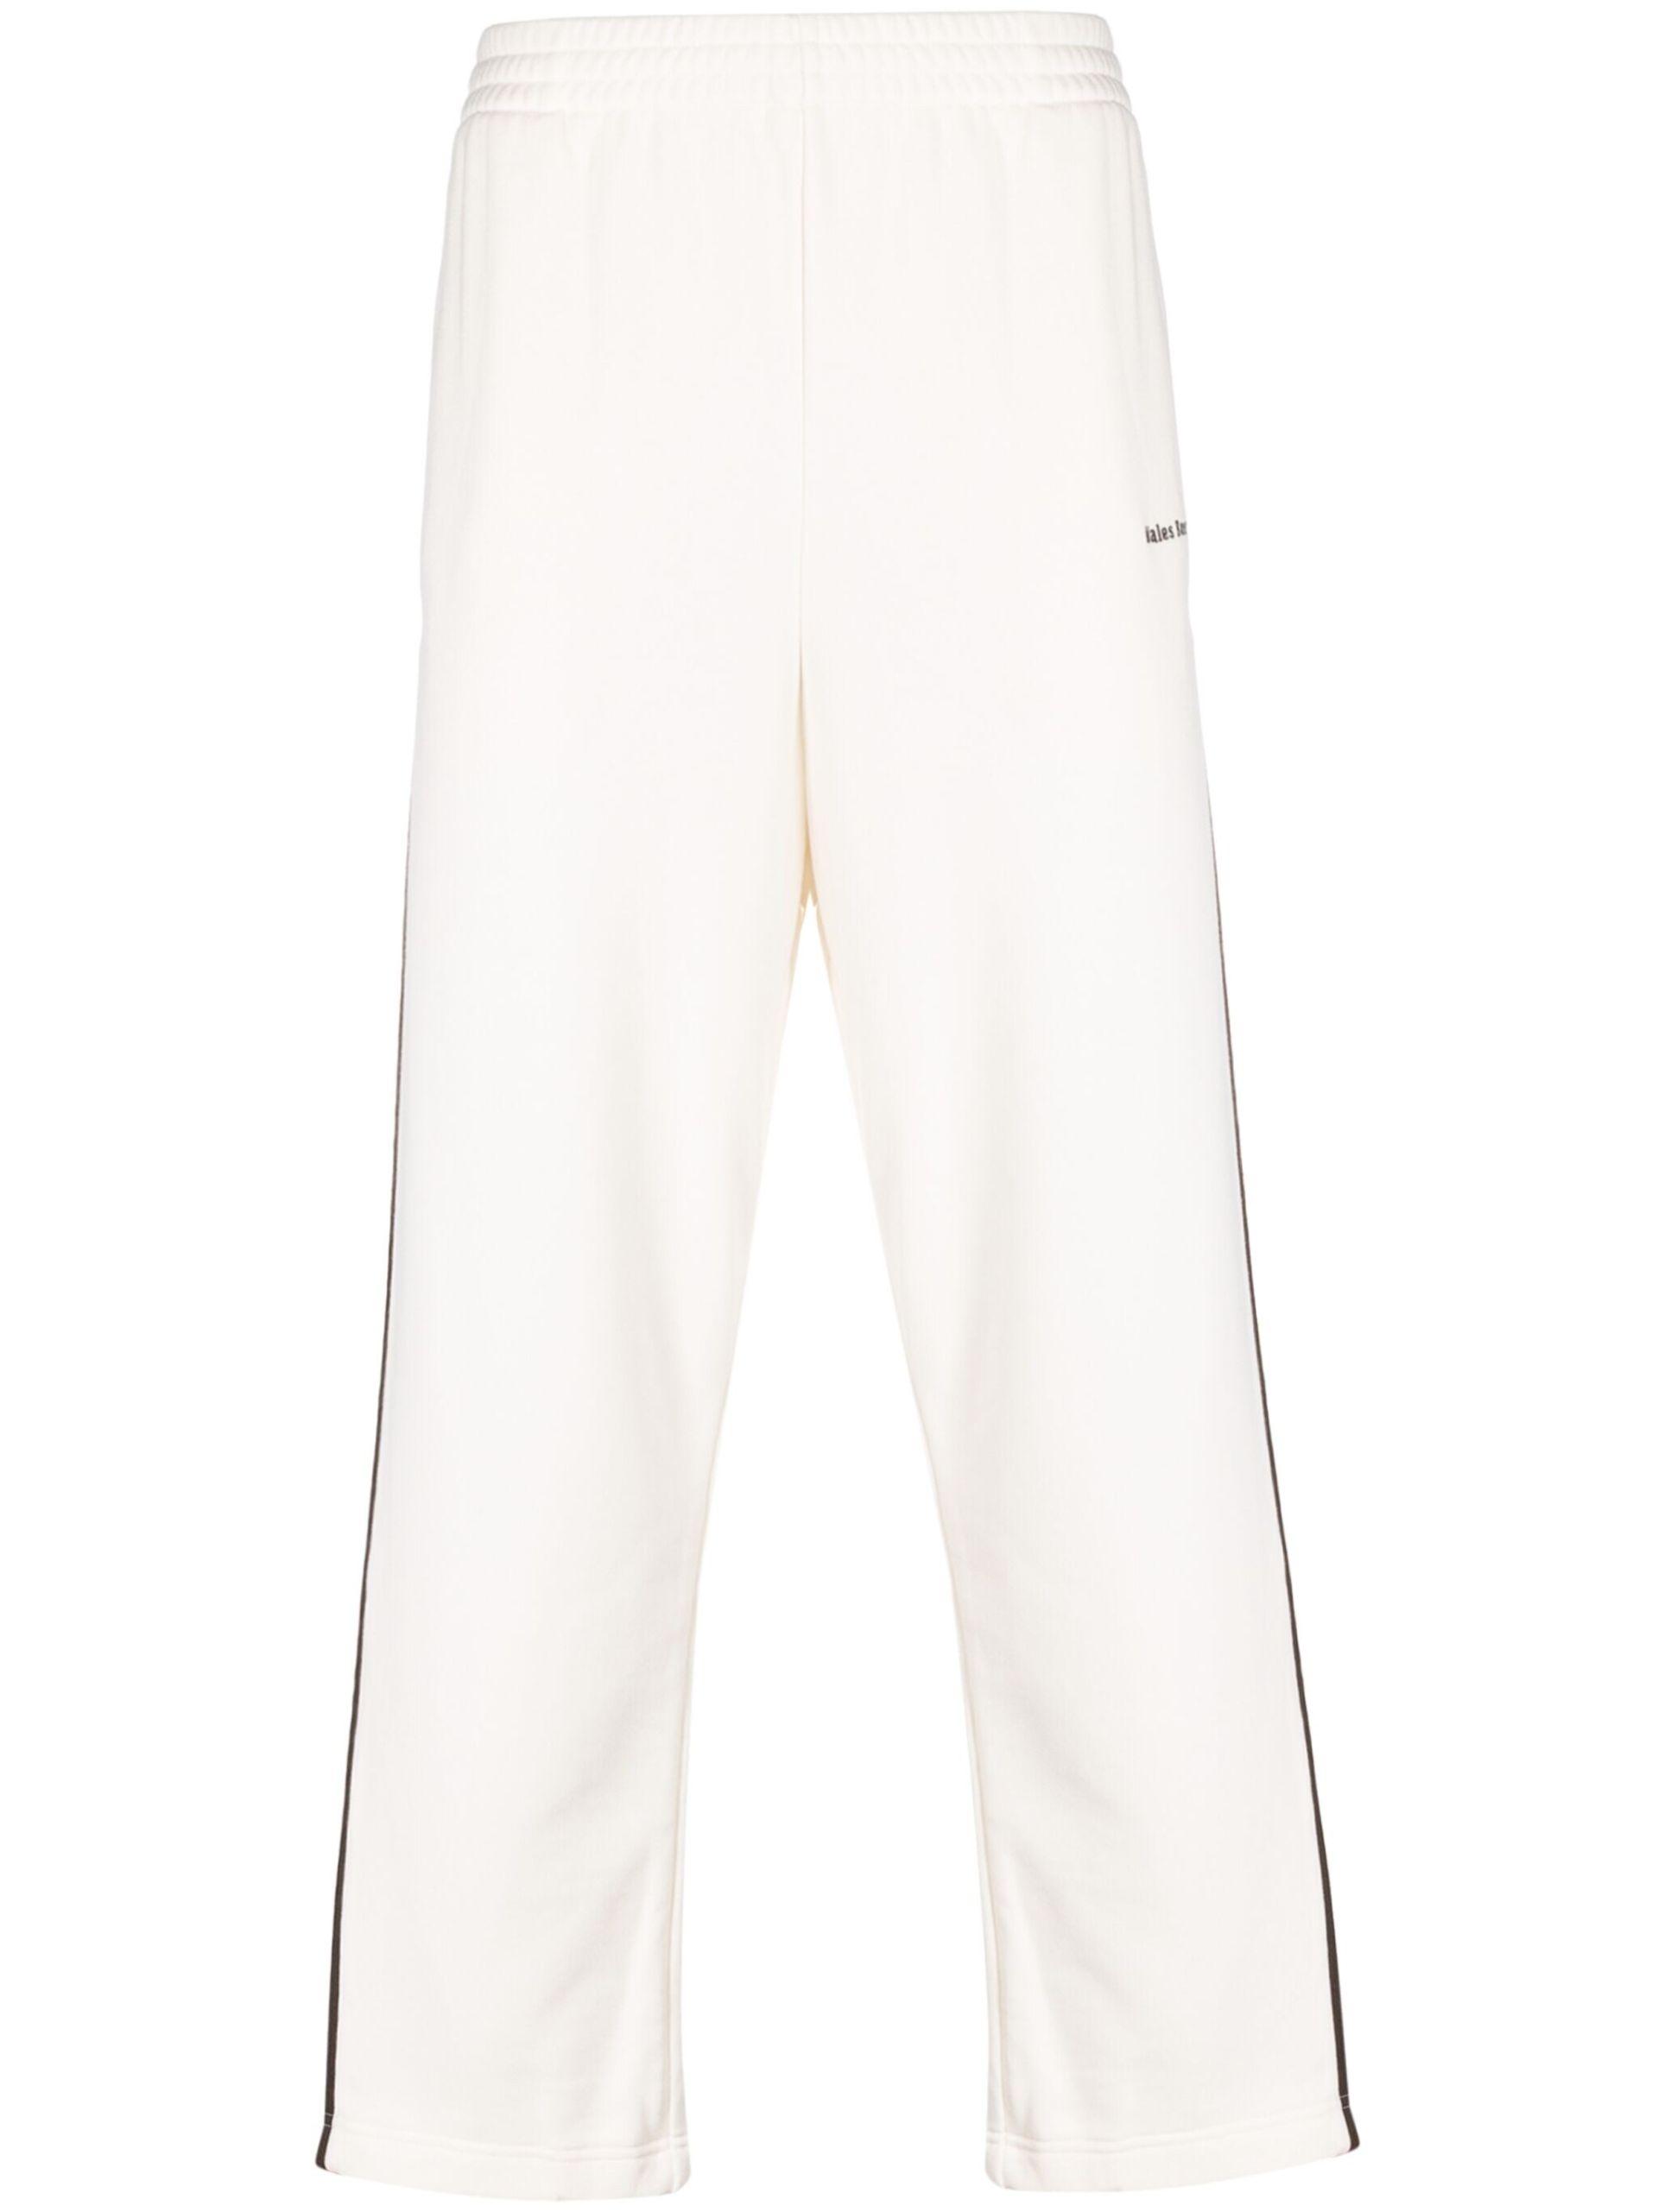 Alan Jones Clothing Men's Slim Fit Poly Cotton Track Pant  (JOG21-P110-BCK-S_Black_S) : Amazon.in: Clothing & Accessories